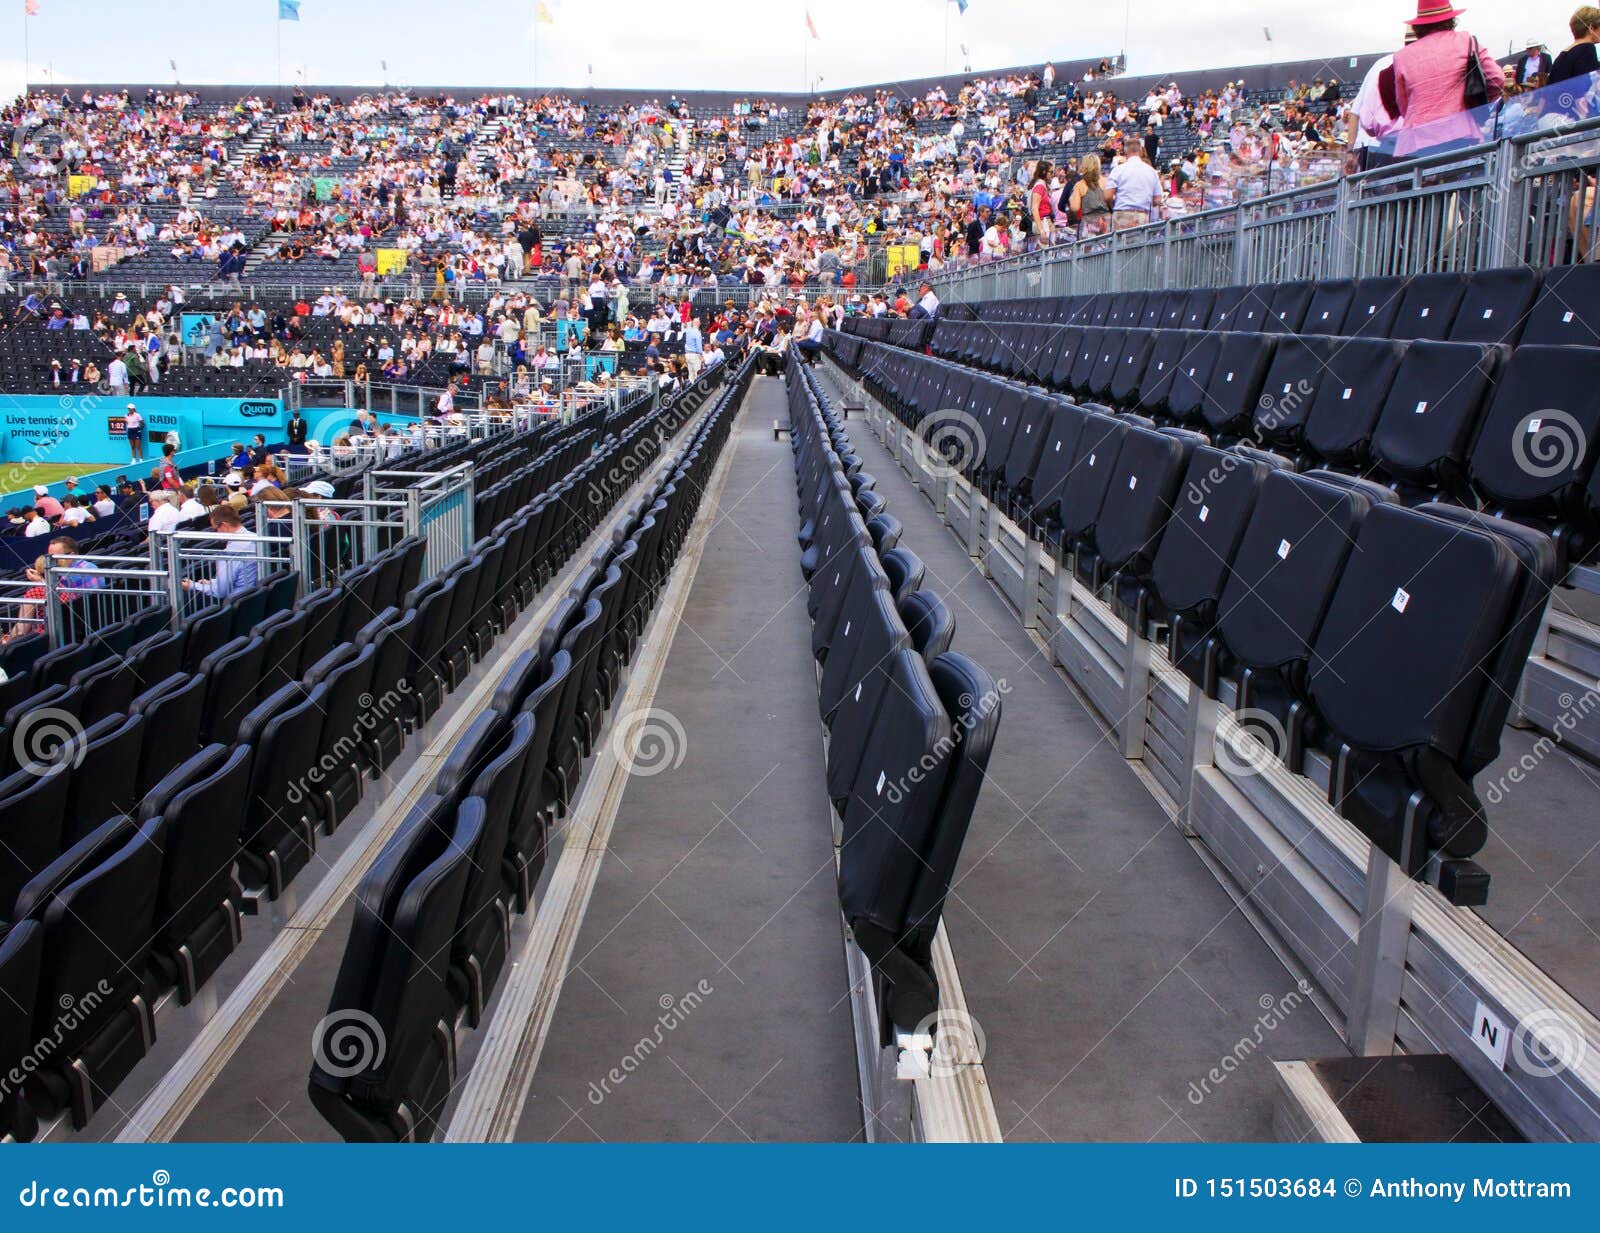 Empty Seats in Stadium editorial stock image